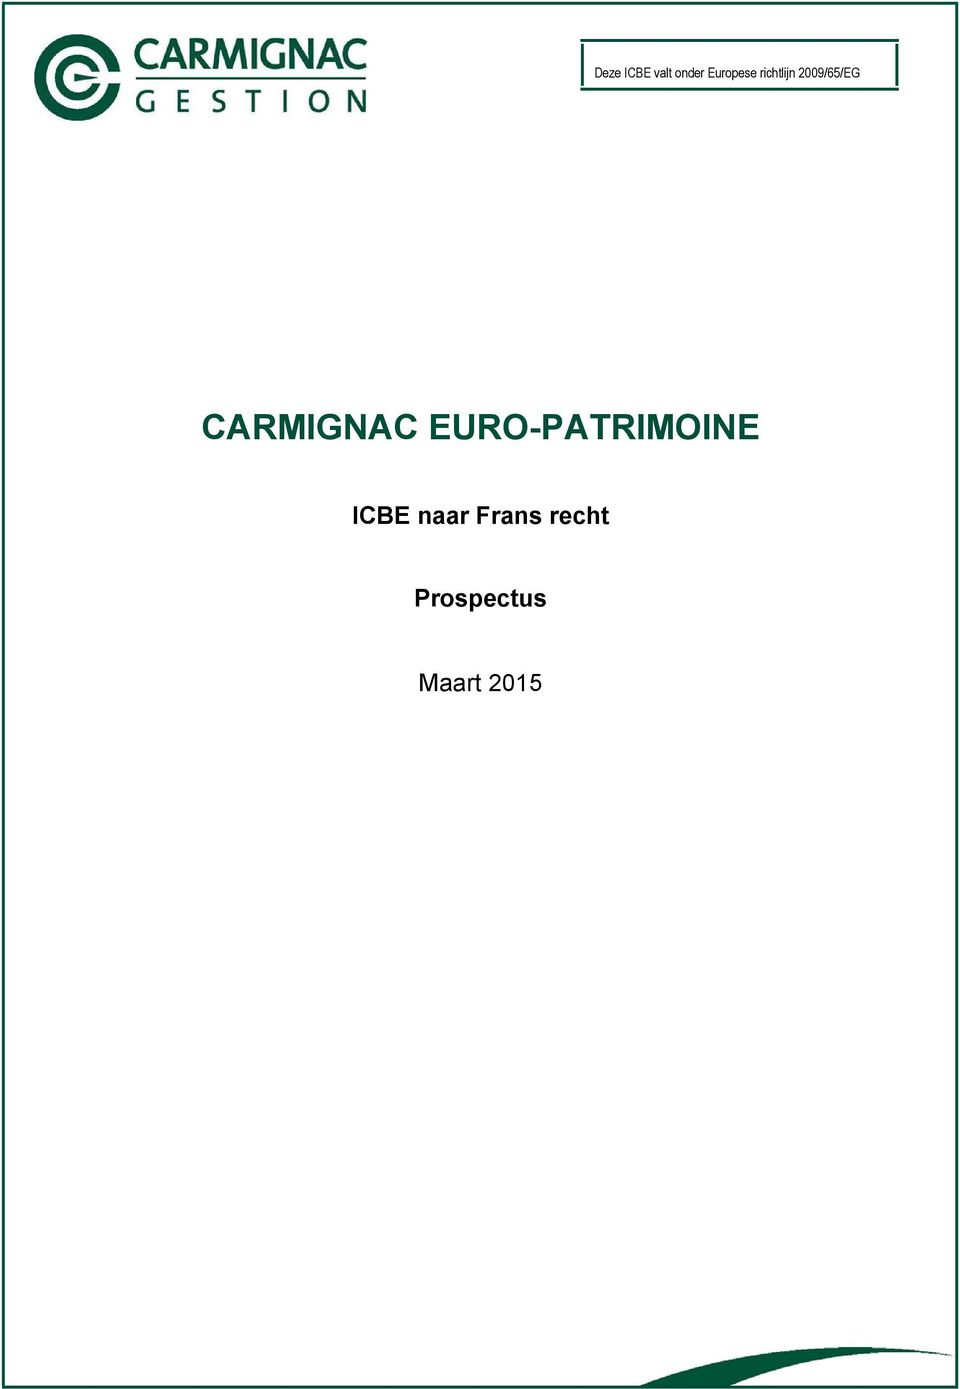 CARMIGNAC EURO-PATRIMOINE